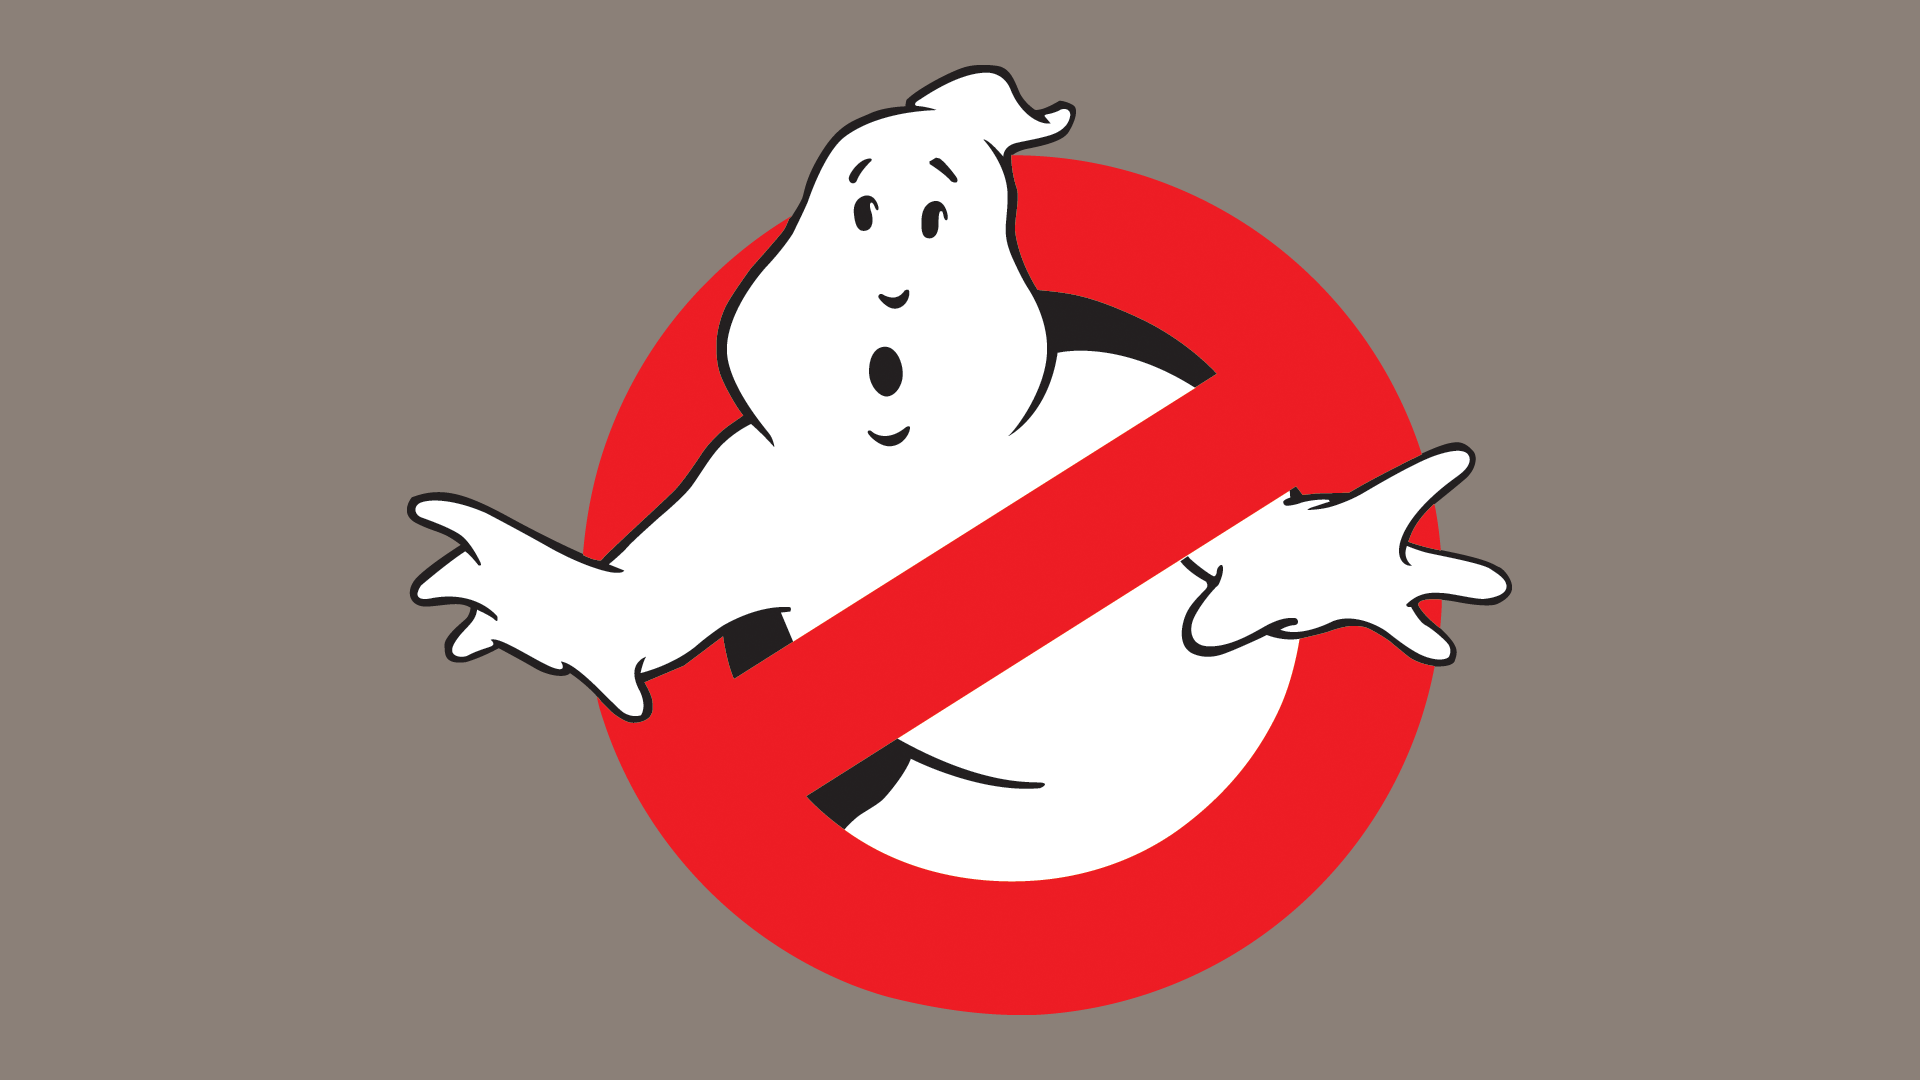 Ghostbuster logo